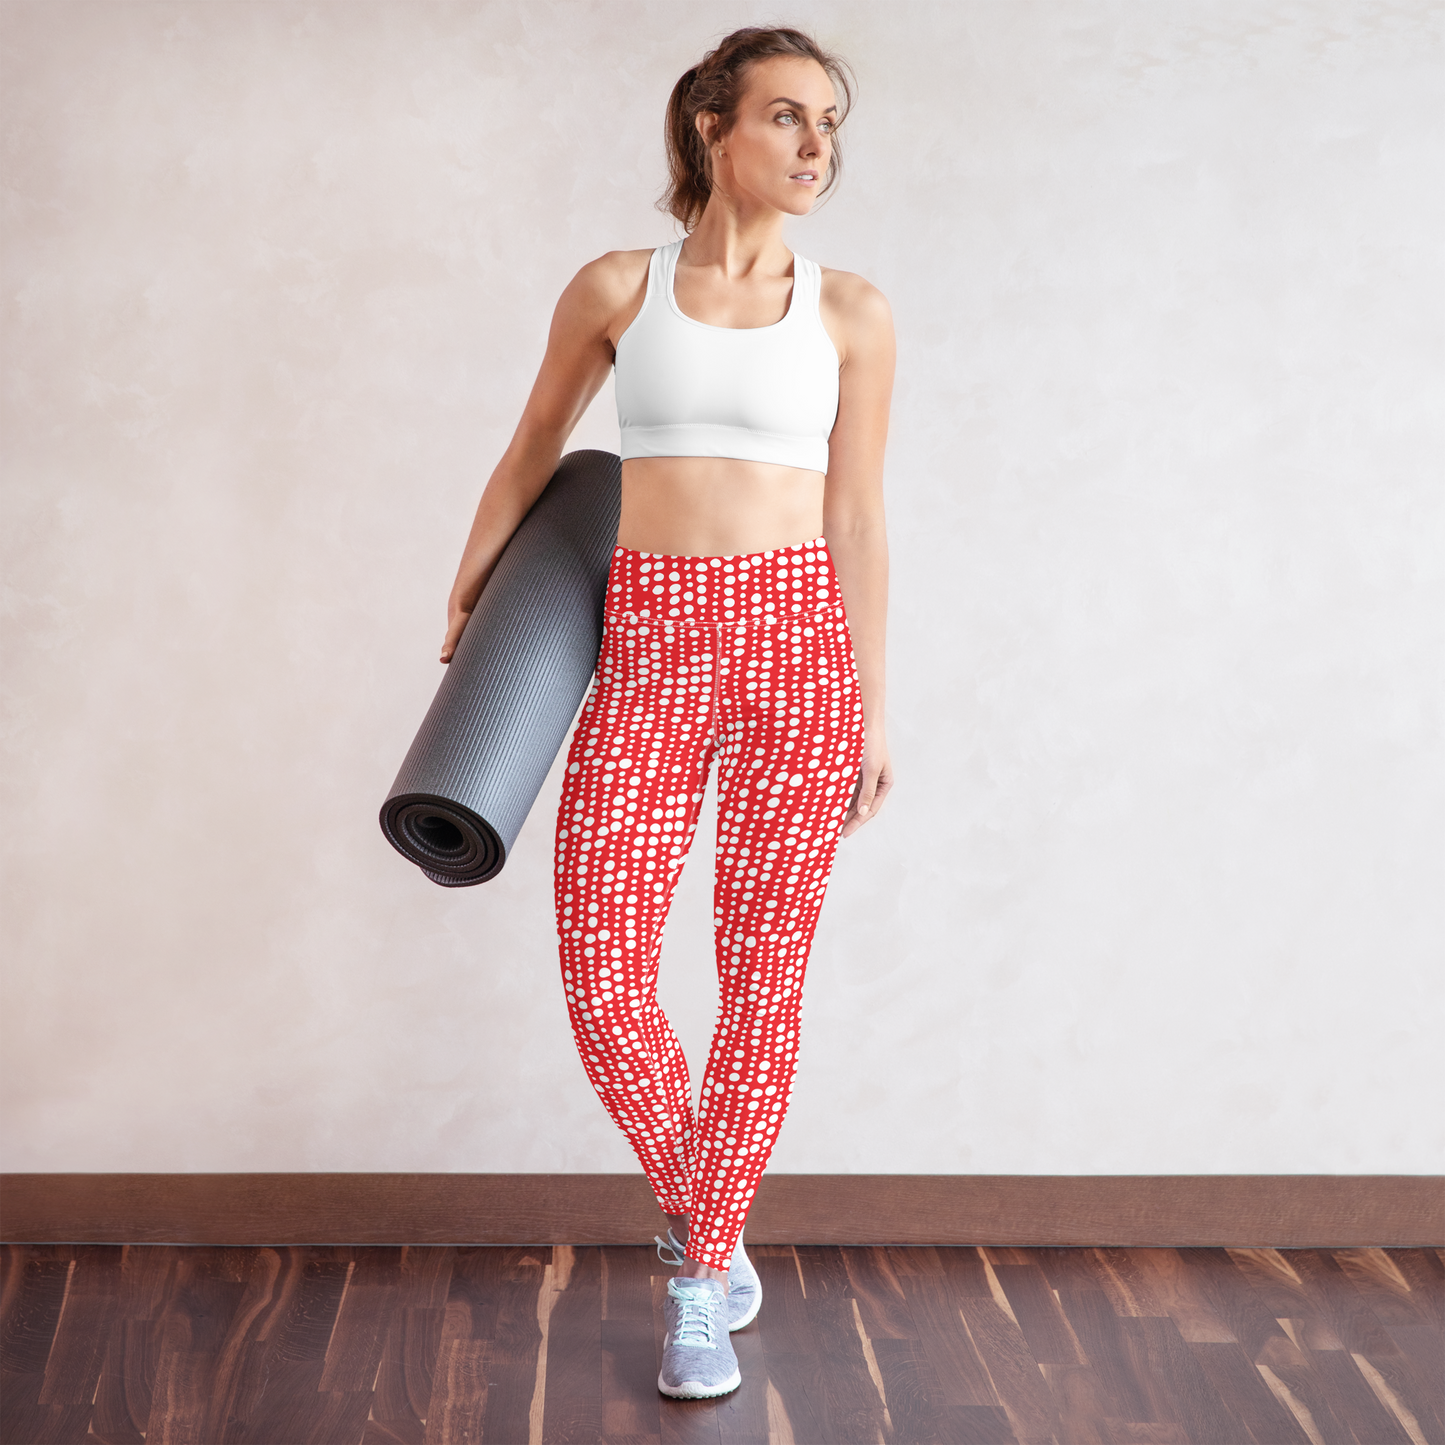 Women Yoga Legging - Red and White Polka Dots Print